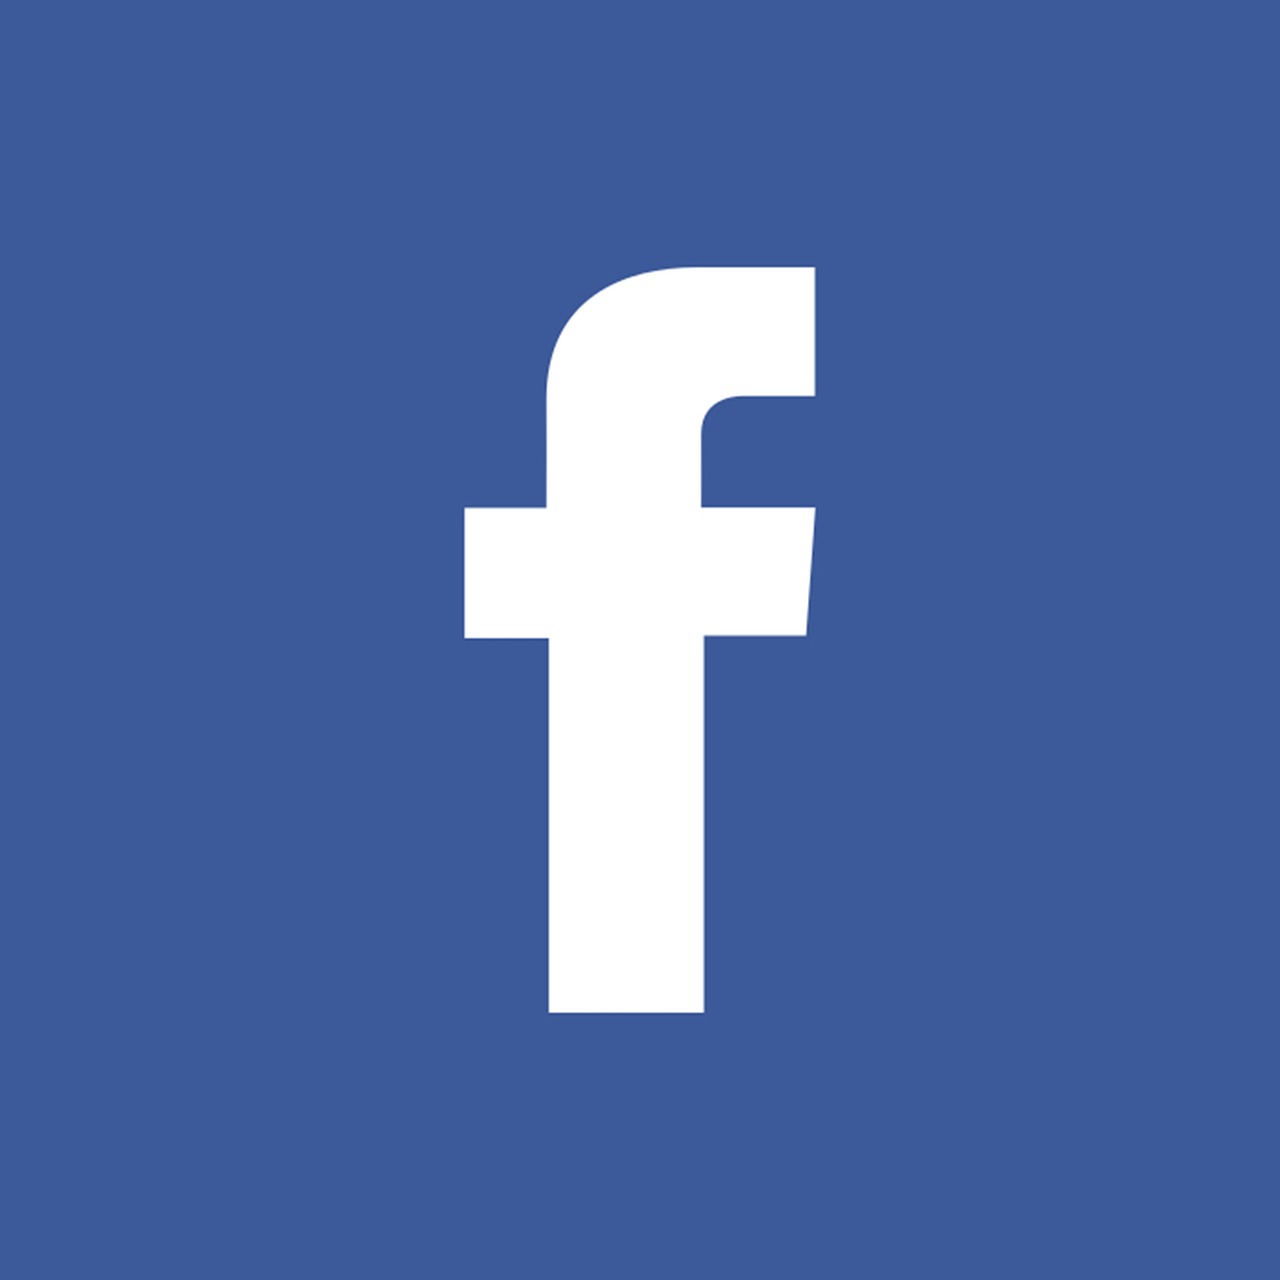 facebook blue logo free photo